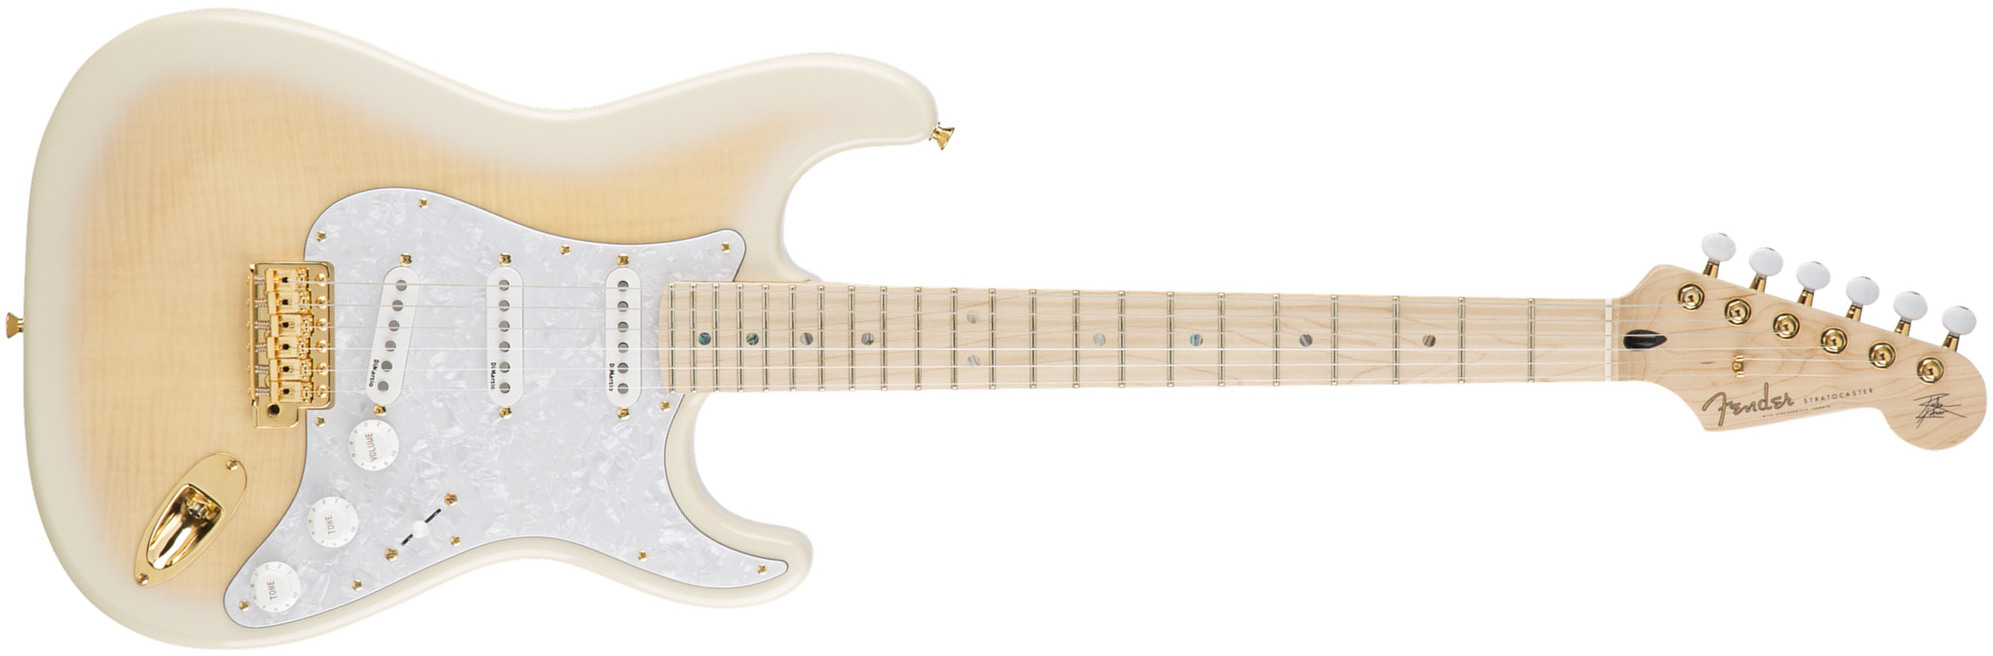 Fender Richie Kotzen Strat Jap Signature 3s Dimarzio Trem Mn - Transparent White Burst - E-Gitarre in Str-Form - Main picture